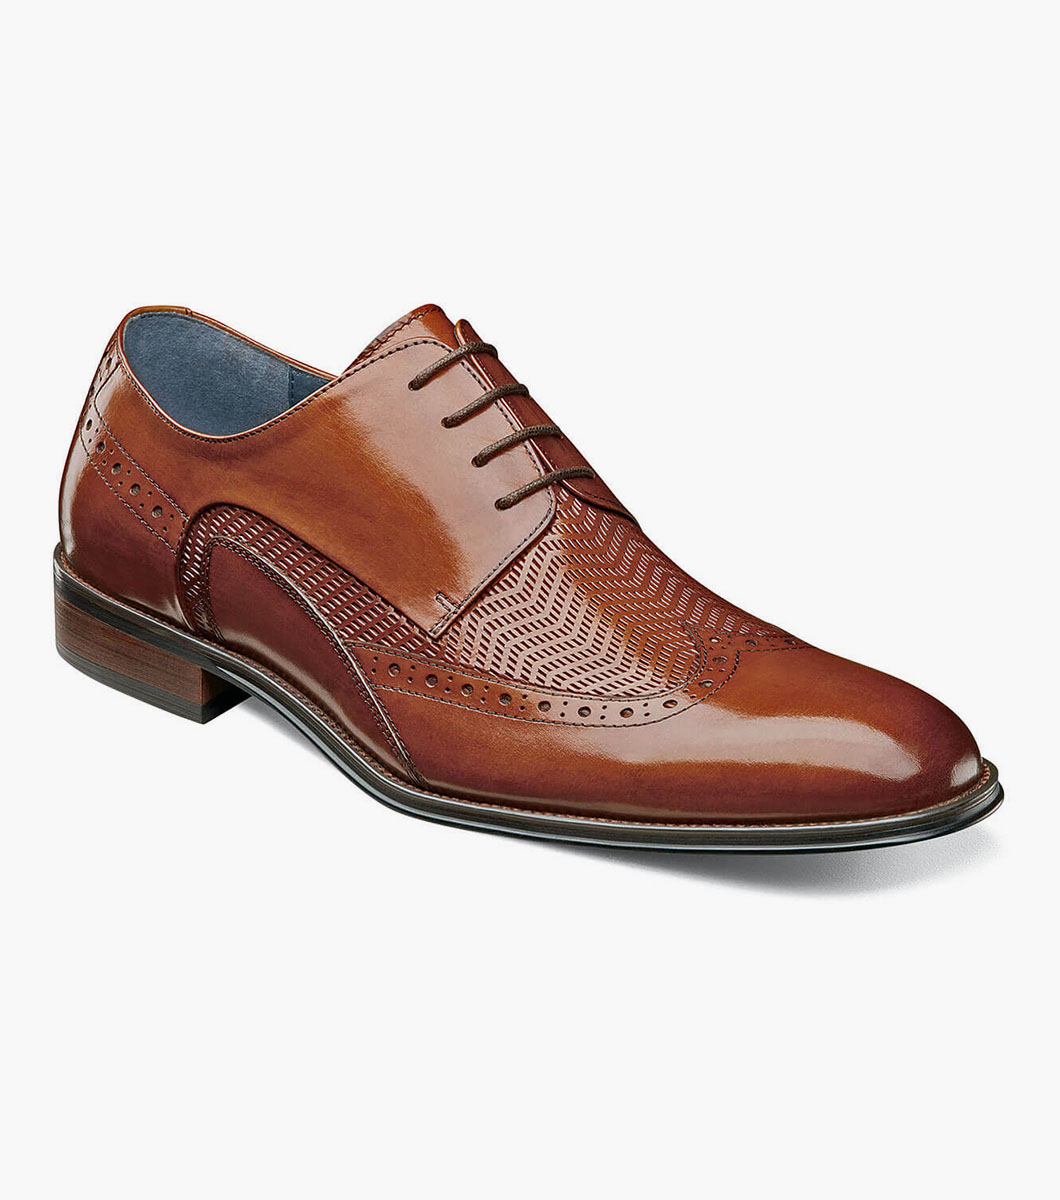 Shoes Wingtip Oxford Tan 25238-240 